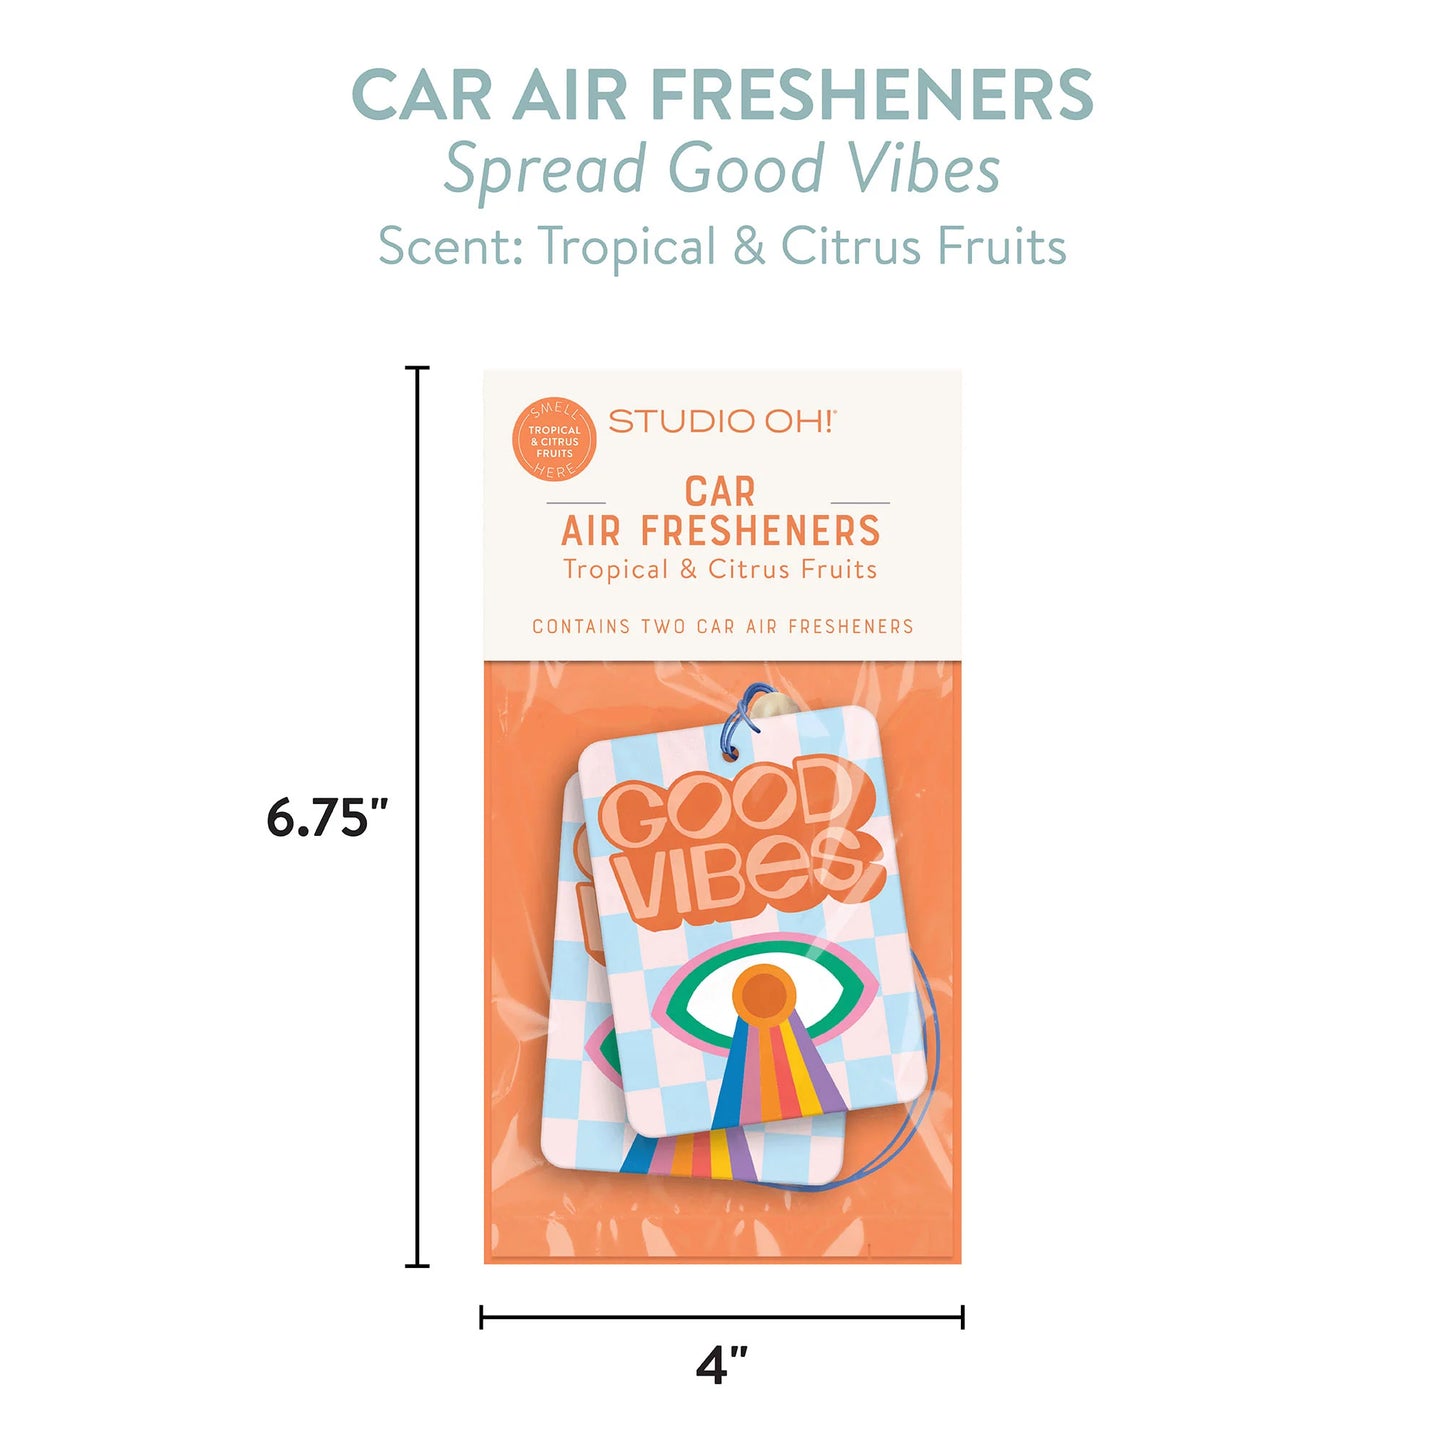 Car Air Fresheners - Spread Good Vibes